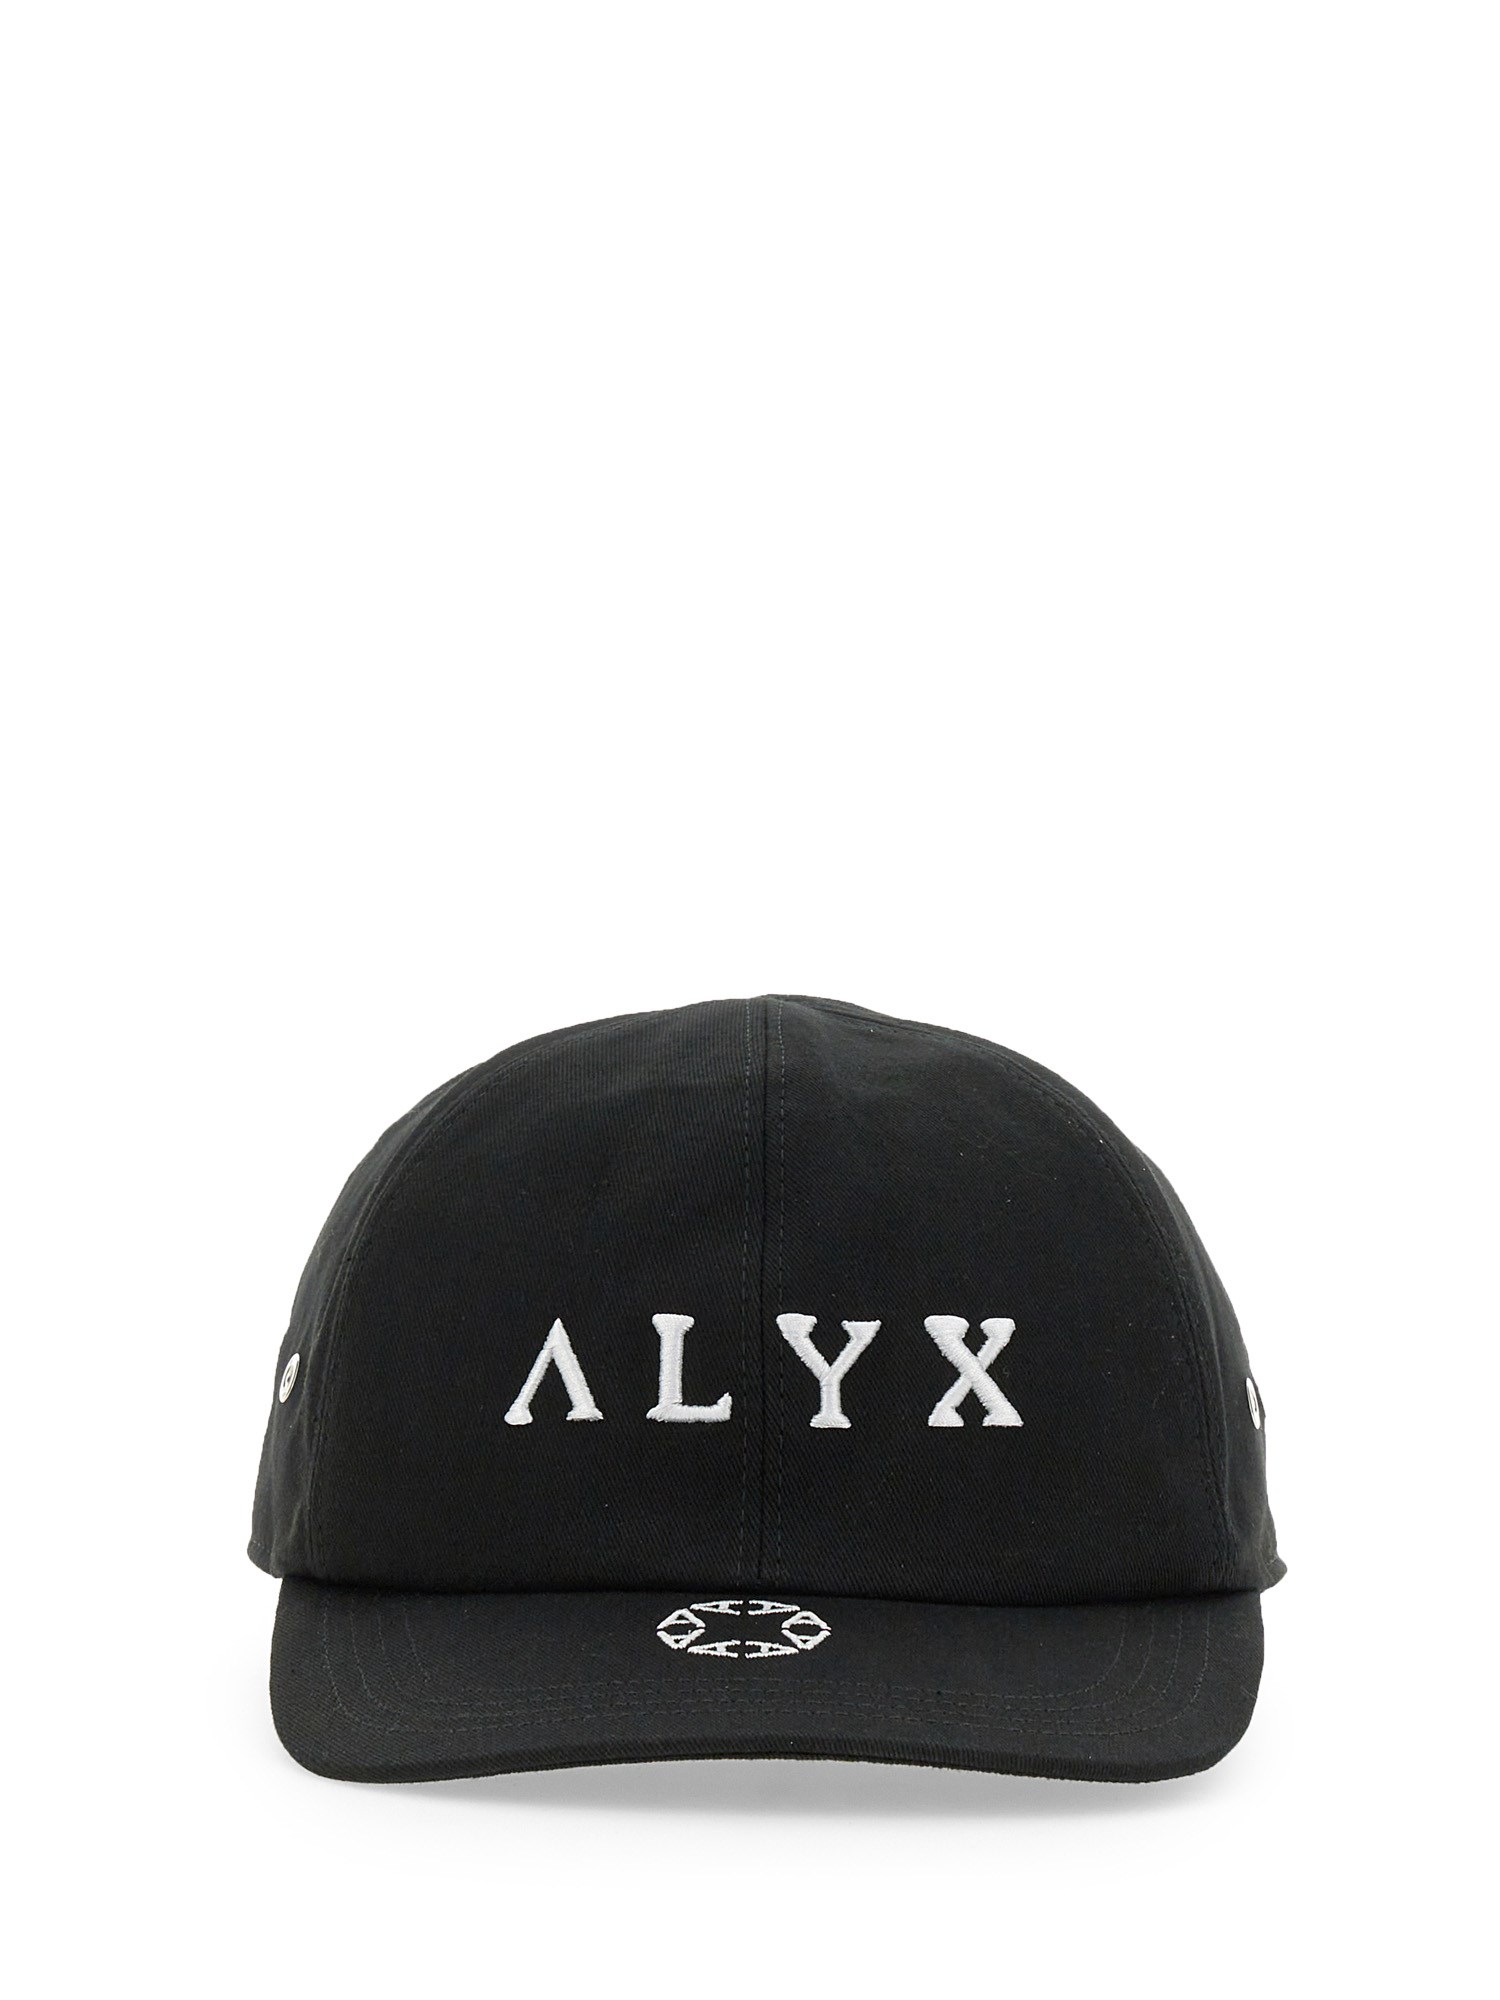 1017 alyx 9sm baseball hat with logo